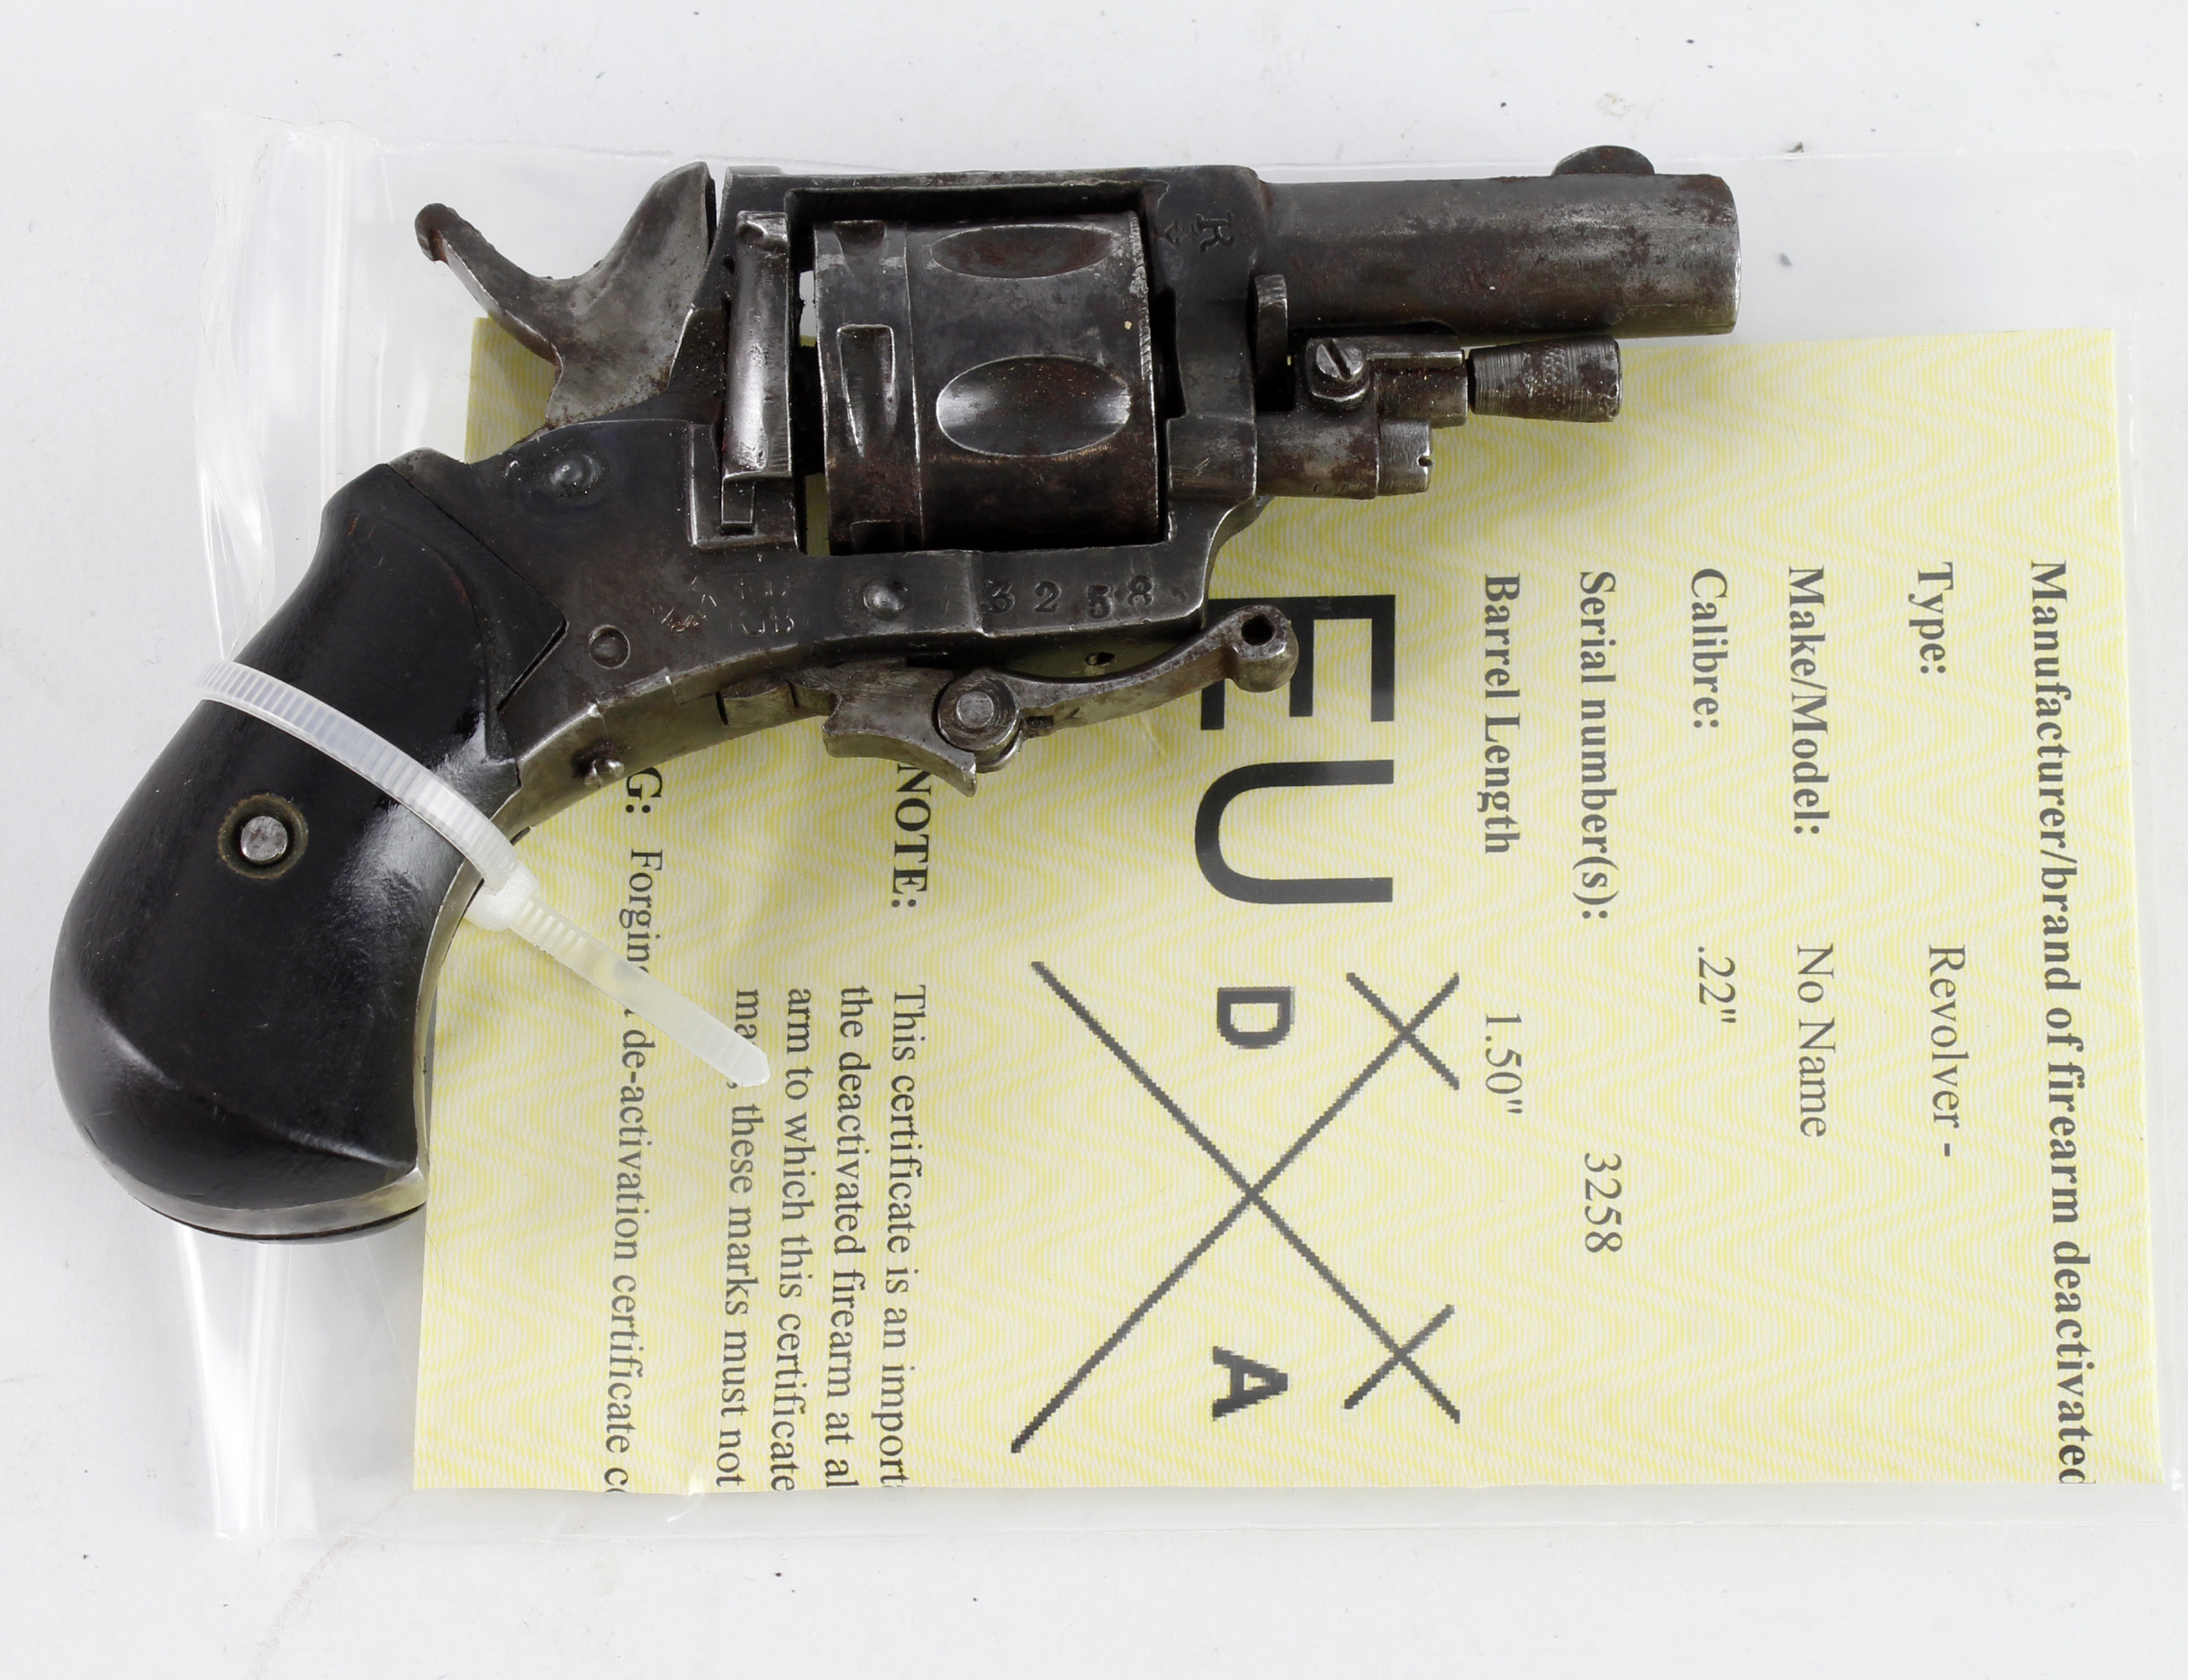 Belgian (?) .22 small revolver / pocket pistol. Barrel 1.50", folding trigger. With Current